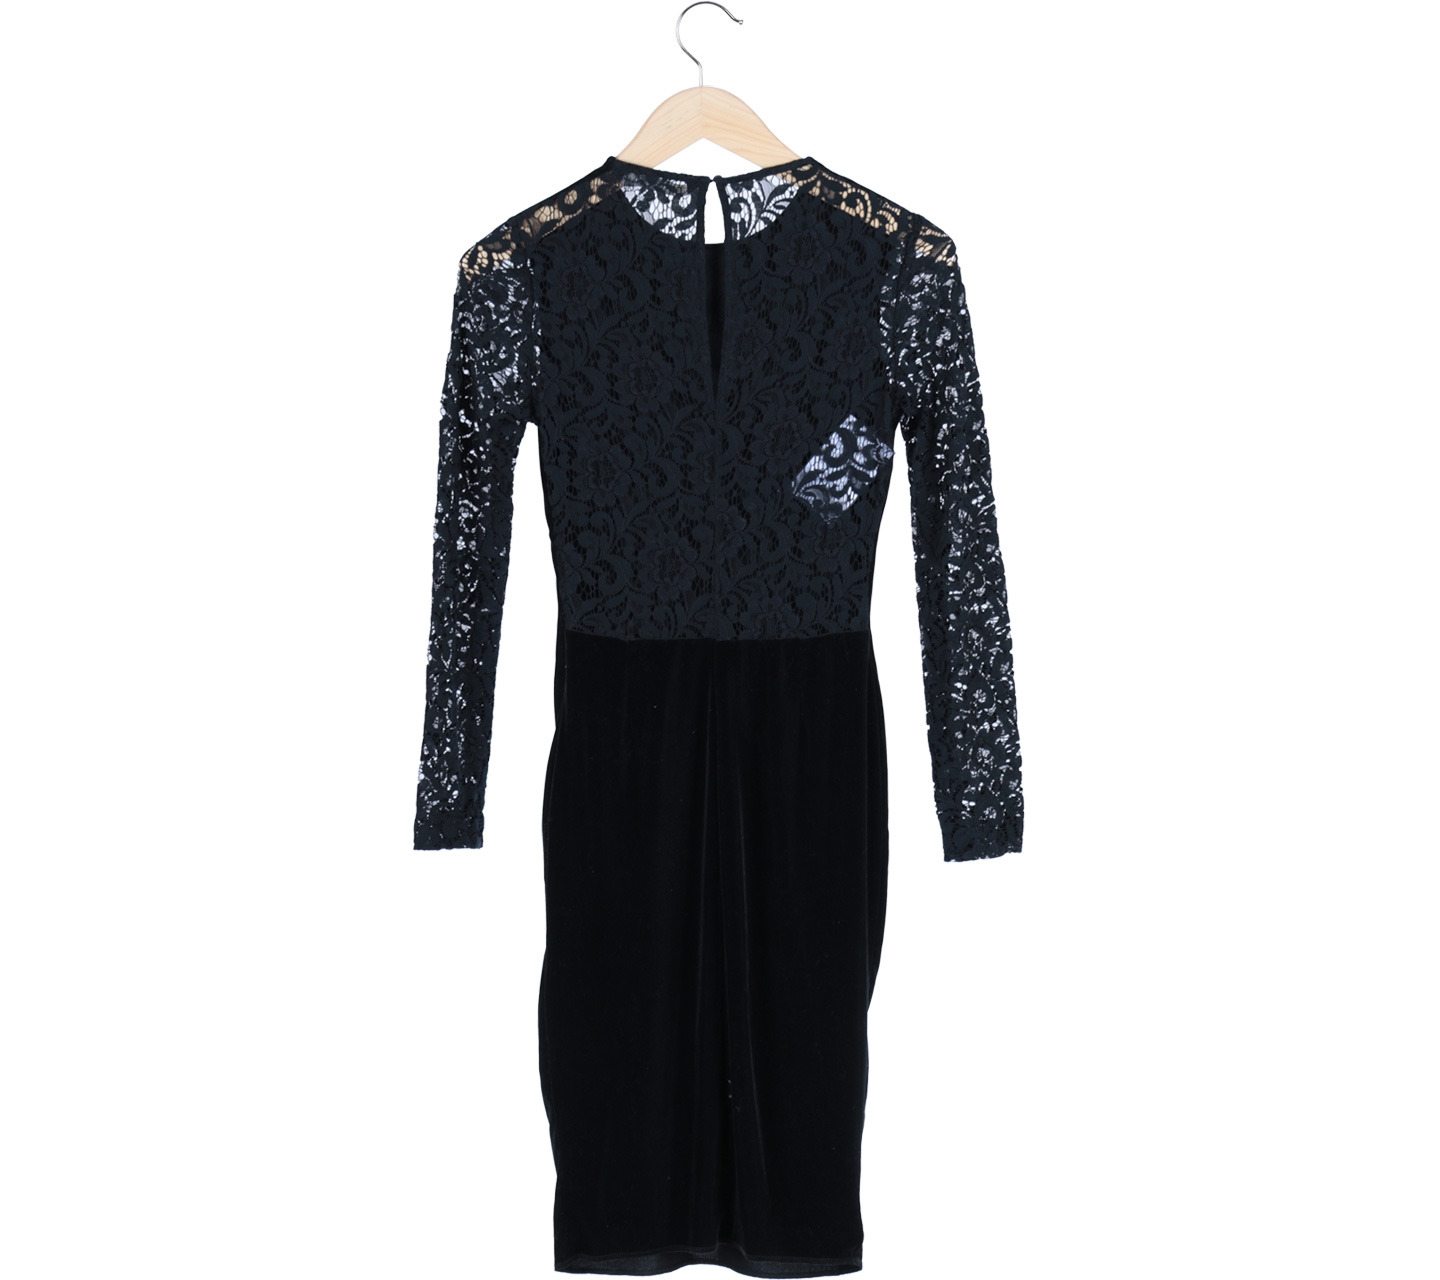 Zara Black Lace Velvet Mini Dress